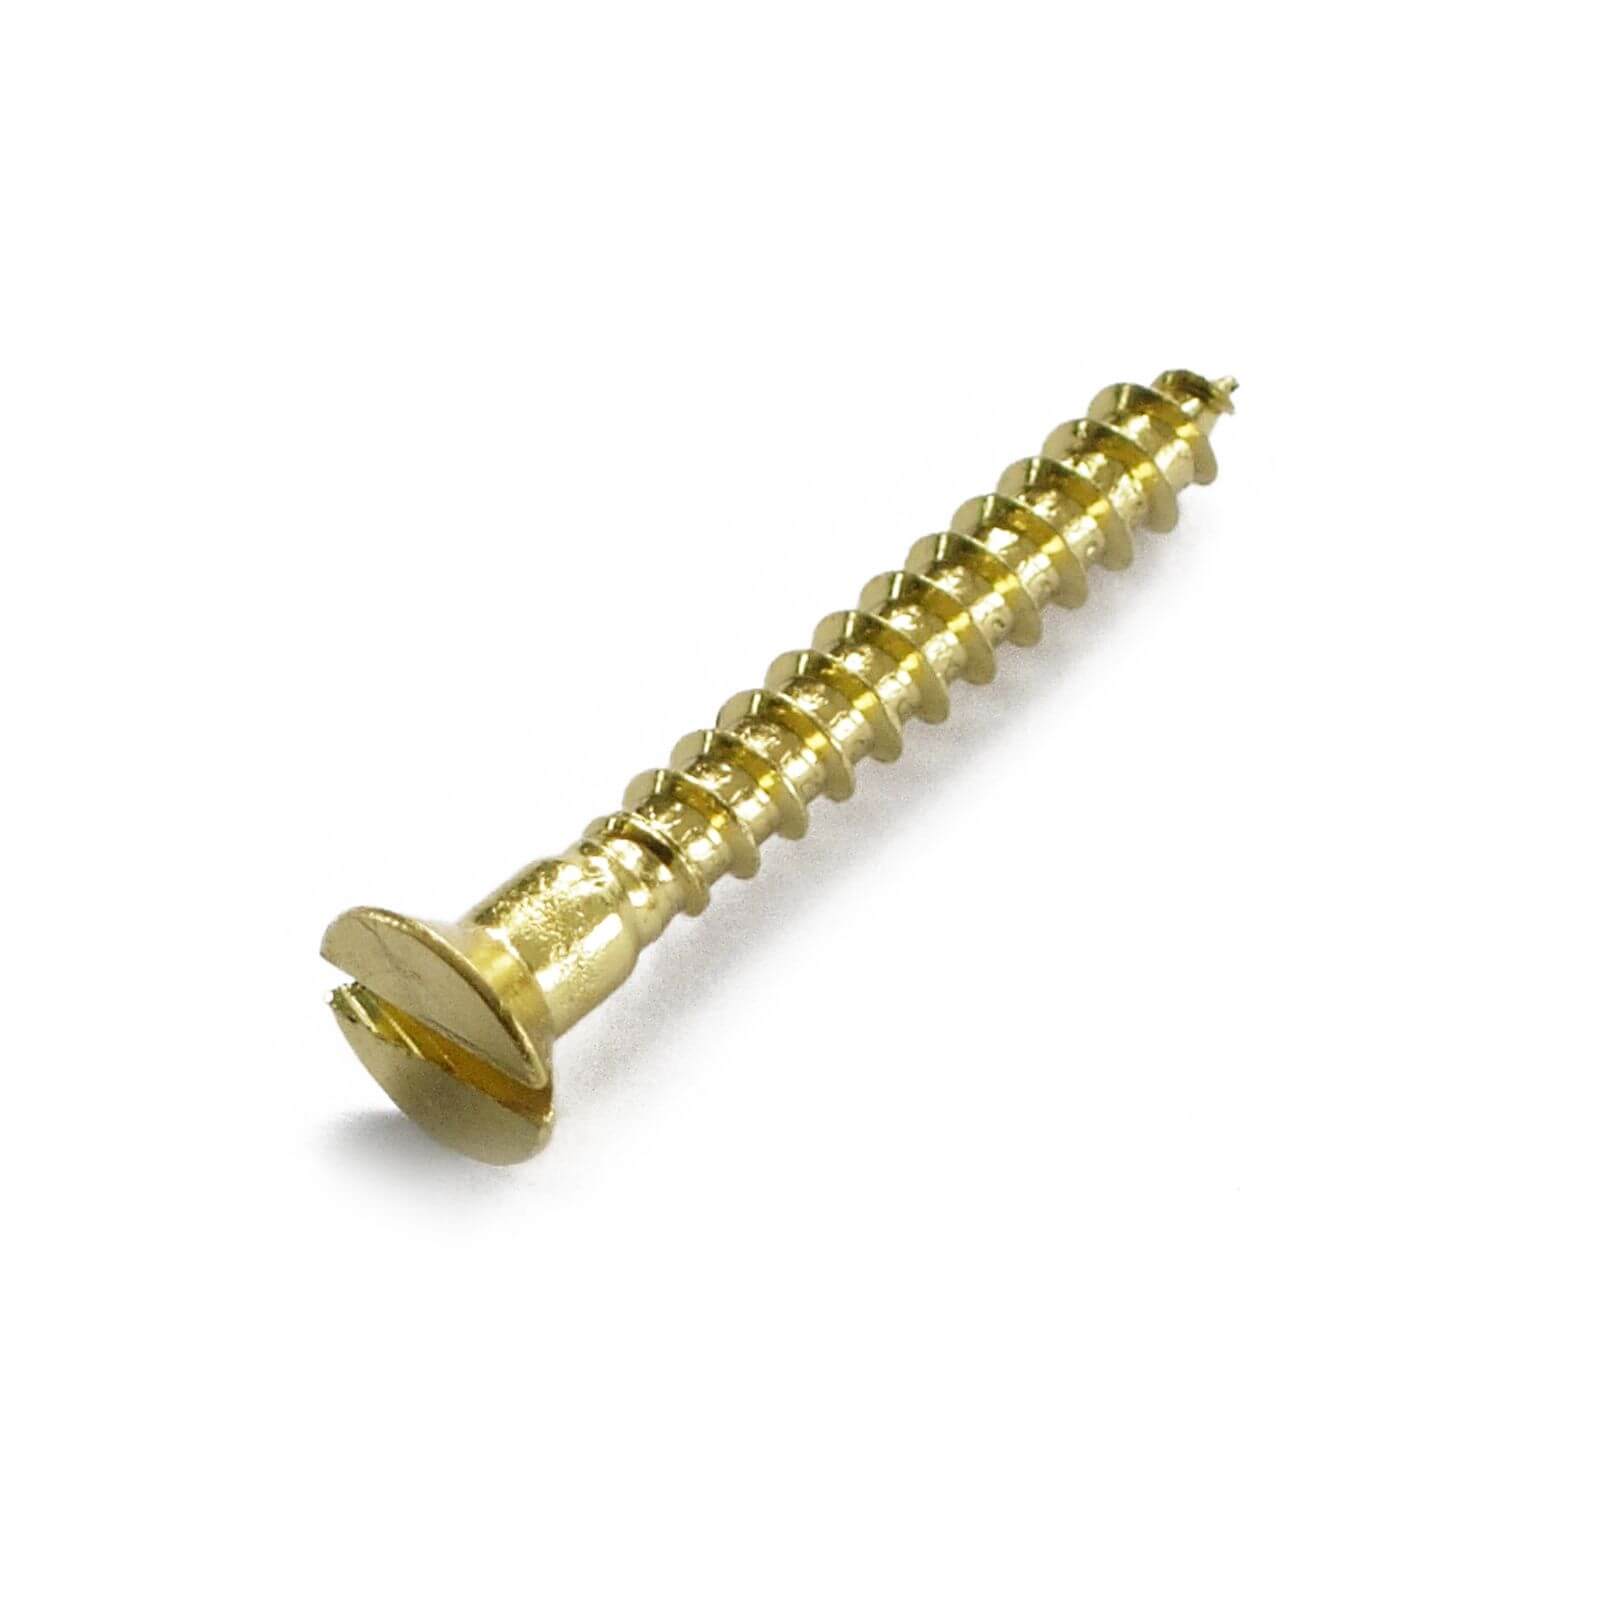 Wood Screw - Countersunk - Brass - 5 x 40mm - 10 Pack